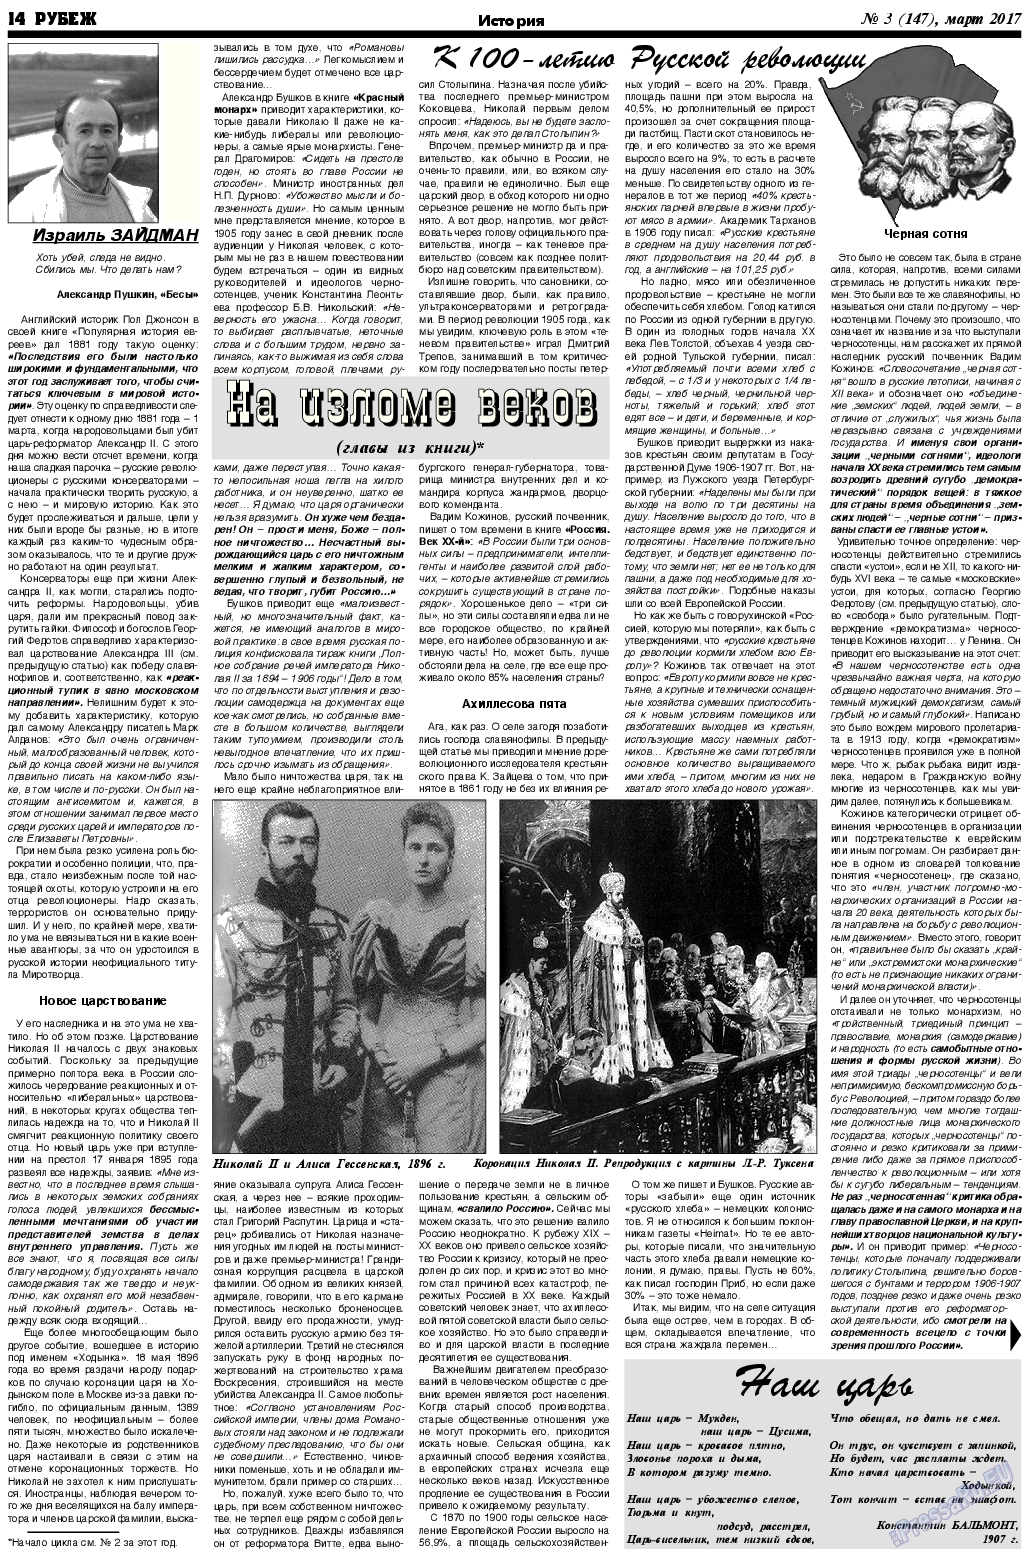 Рубеж, газета. 2017 №3 стр.14